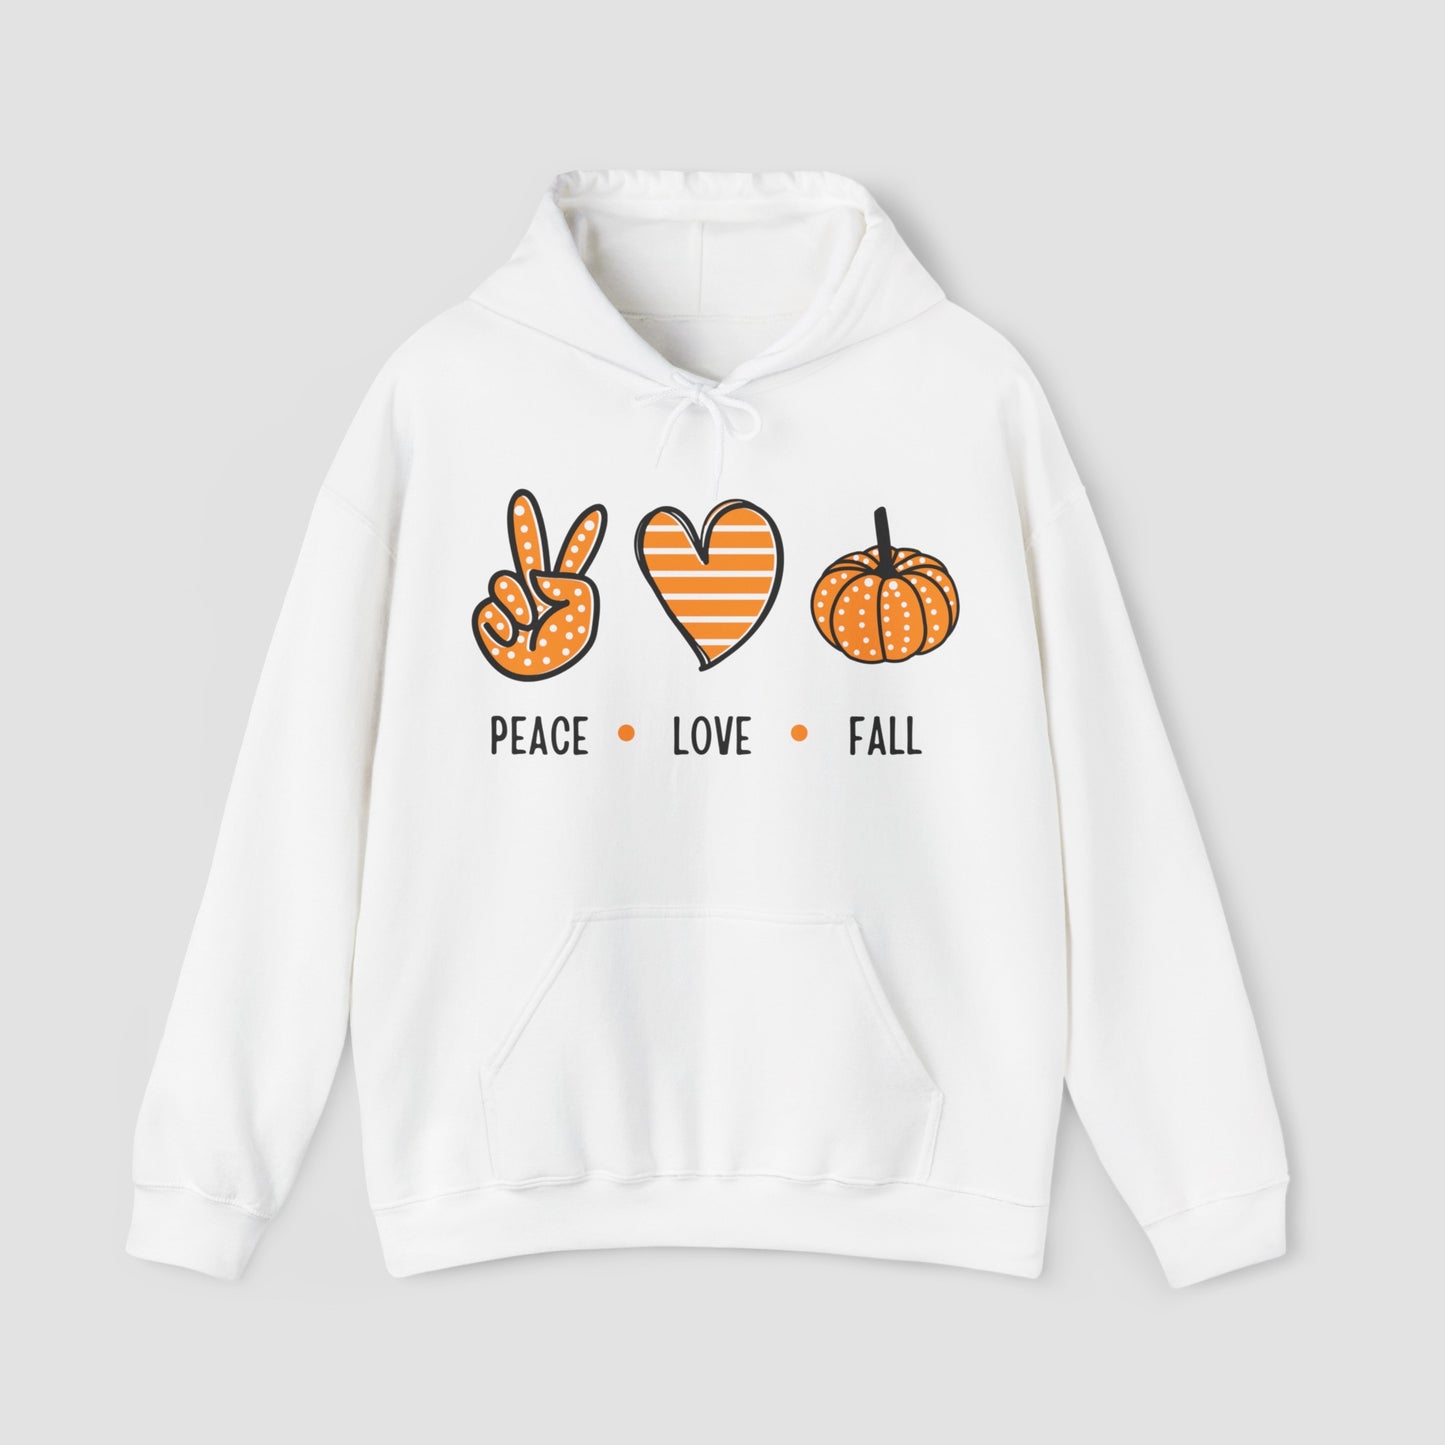 Peace, Love & Fall Unisex Hooded Sweatshirt